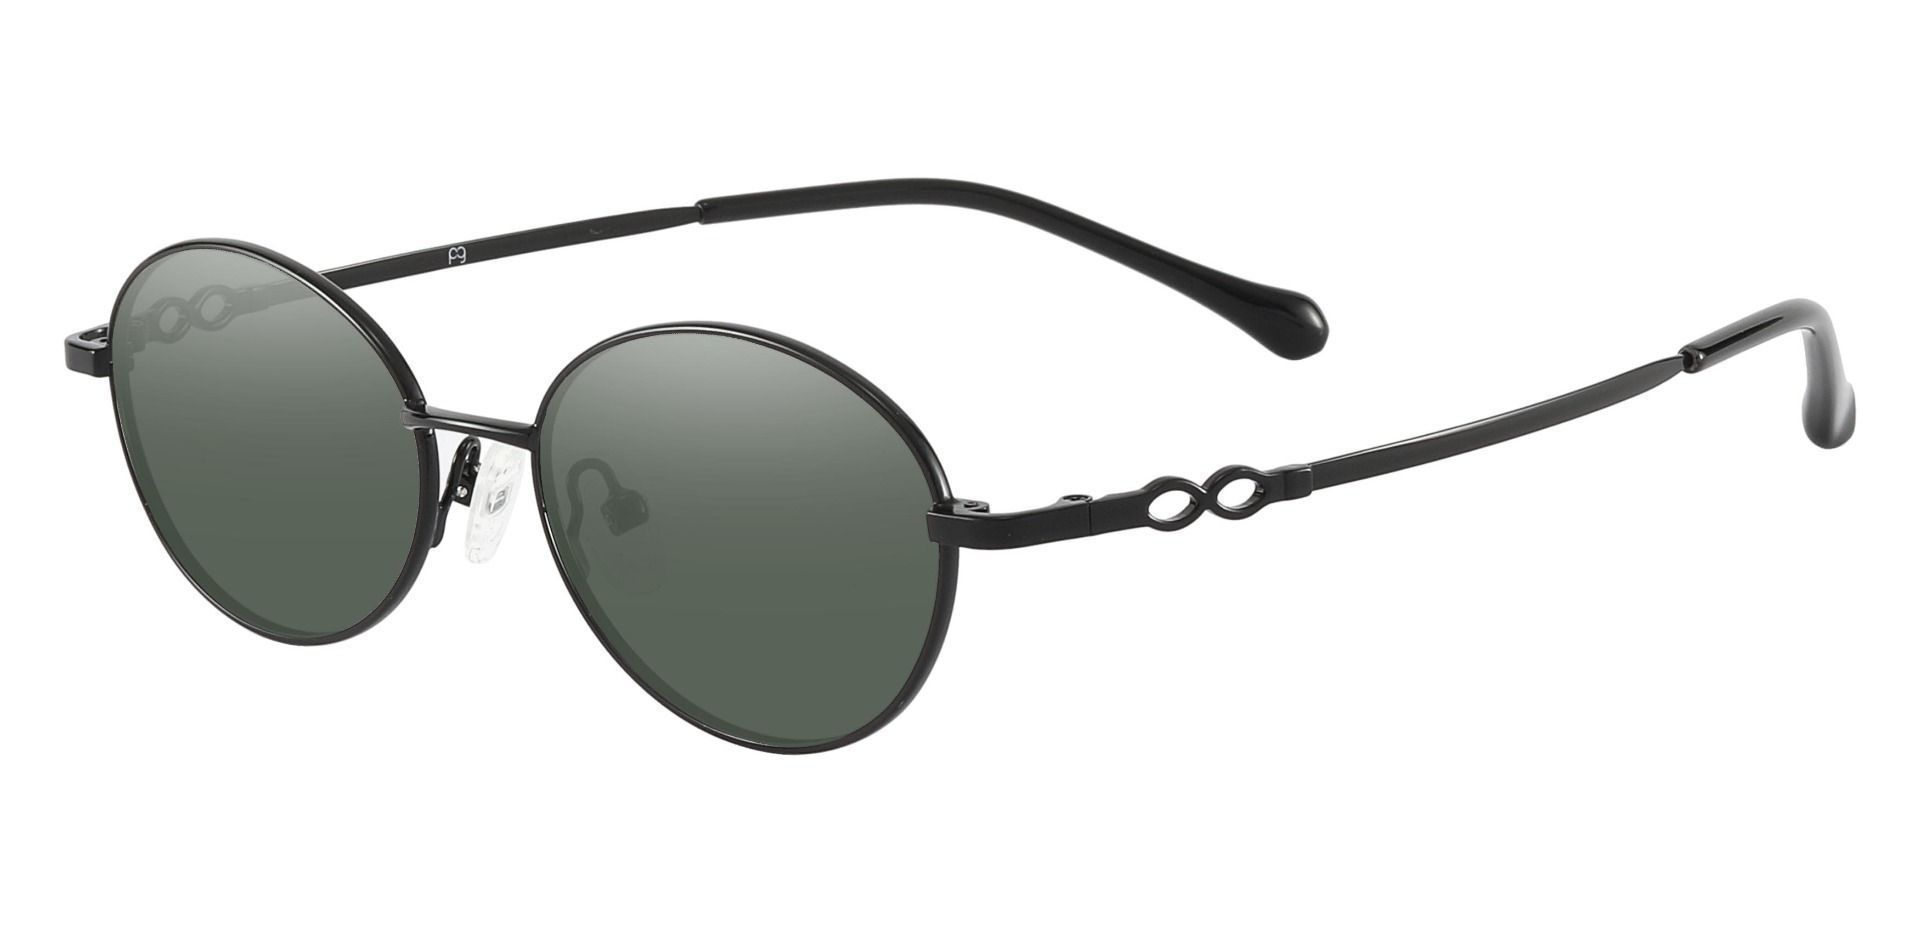 Odyssey Oval Prescription Sunglasses - Black Frame With Green Lenses